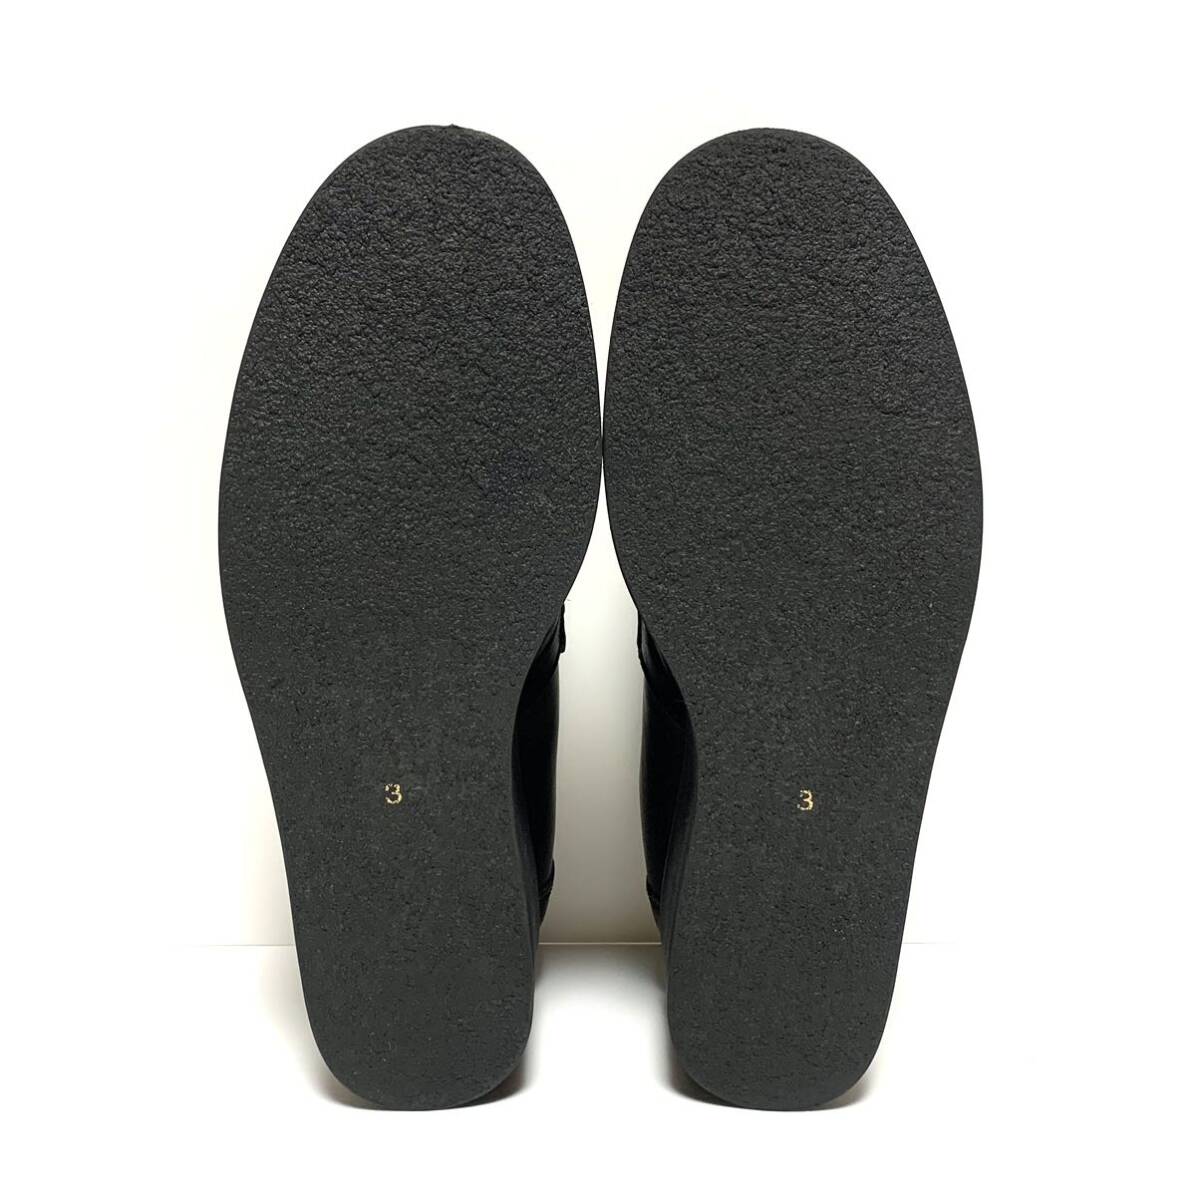 * superior article wise Y\'s leather platform slip-on shoes shoes black Yohji Yamamoto YOHJIYAMAMOTO thickness bottom leather shoes Loafer 